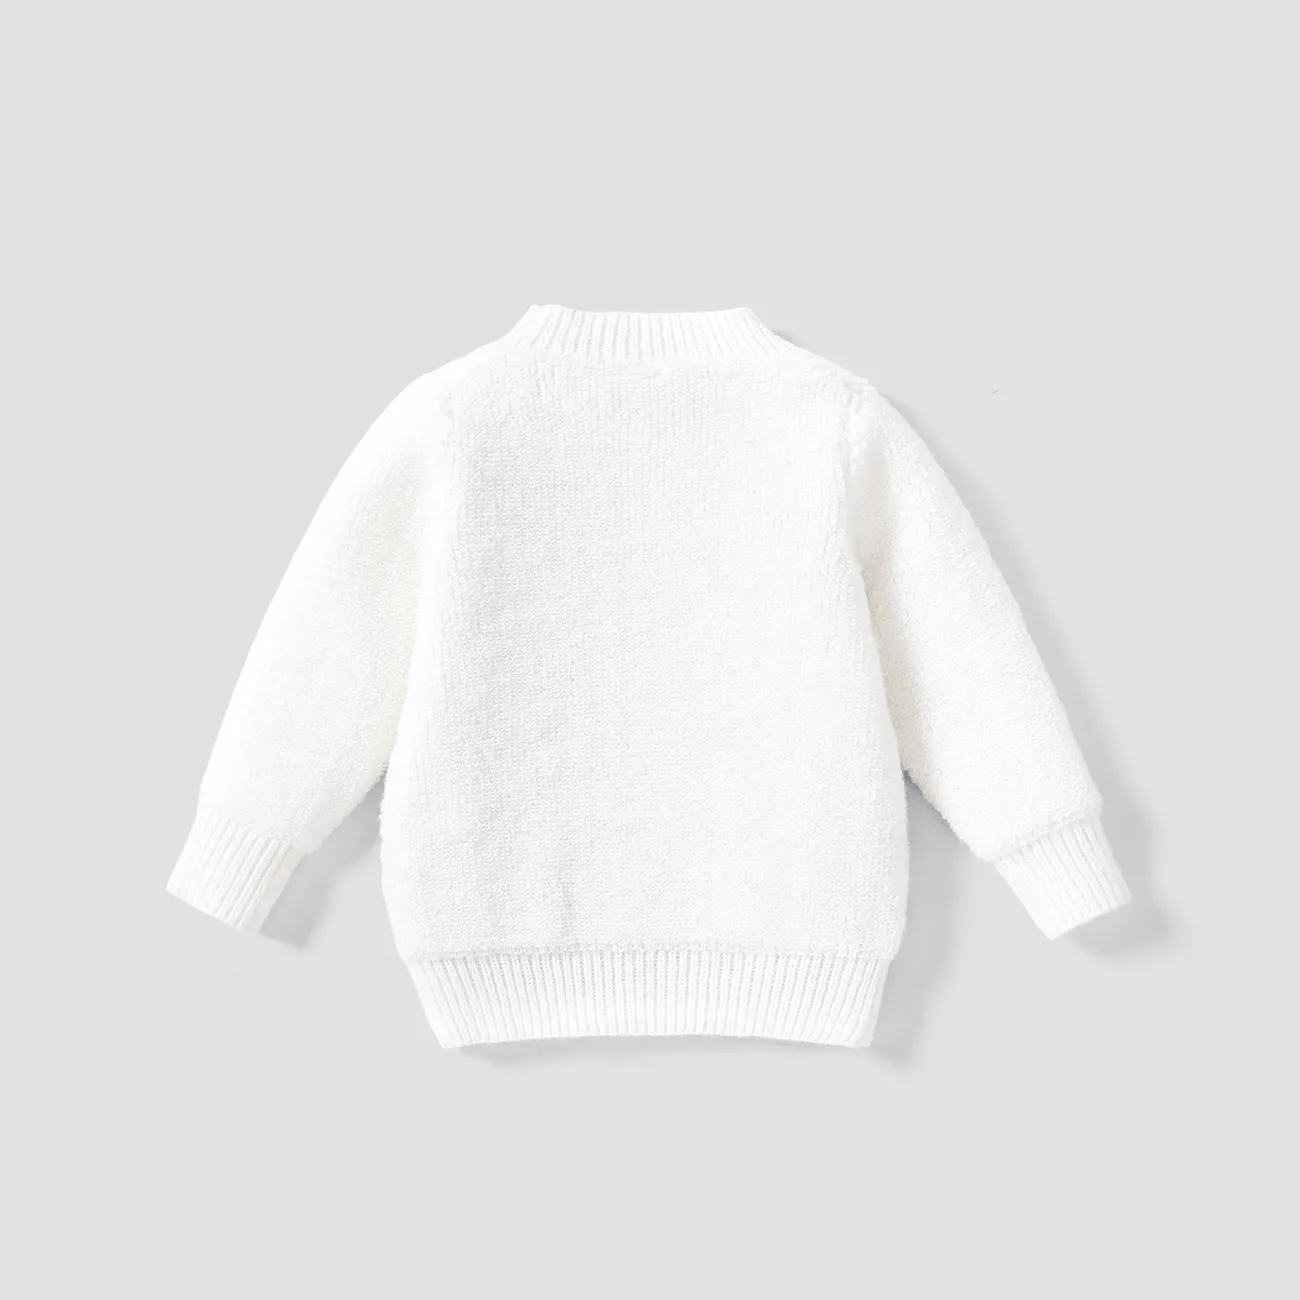  Kid Boy/Girl Childlike Expression Sweater  Blanco big image 1